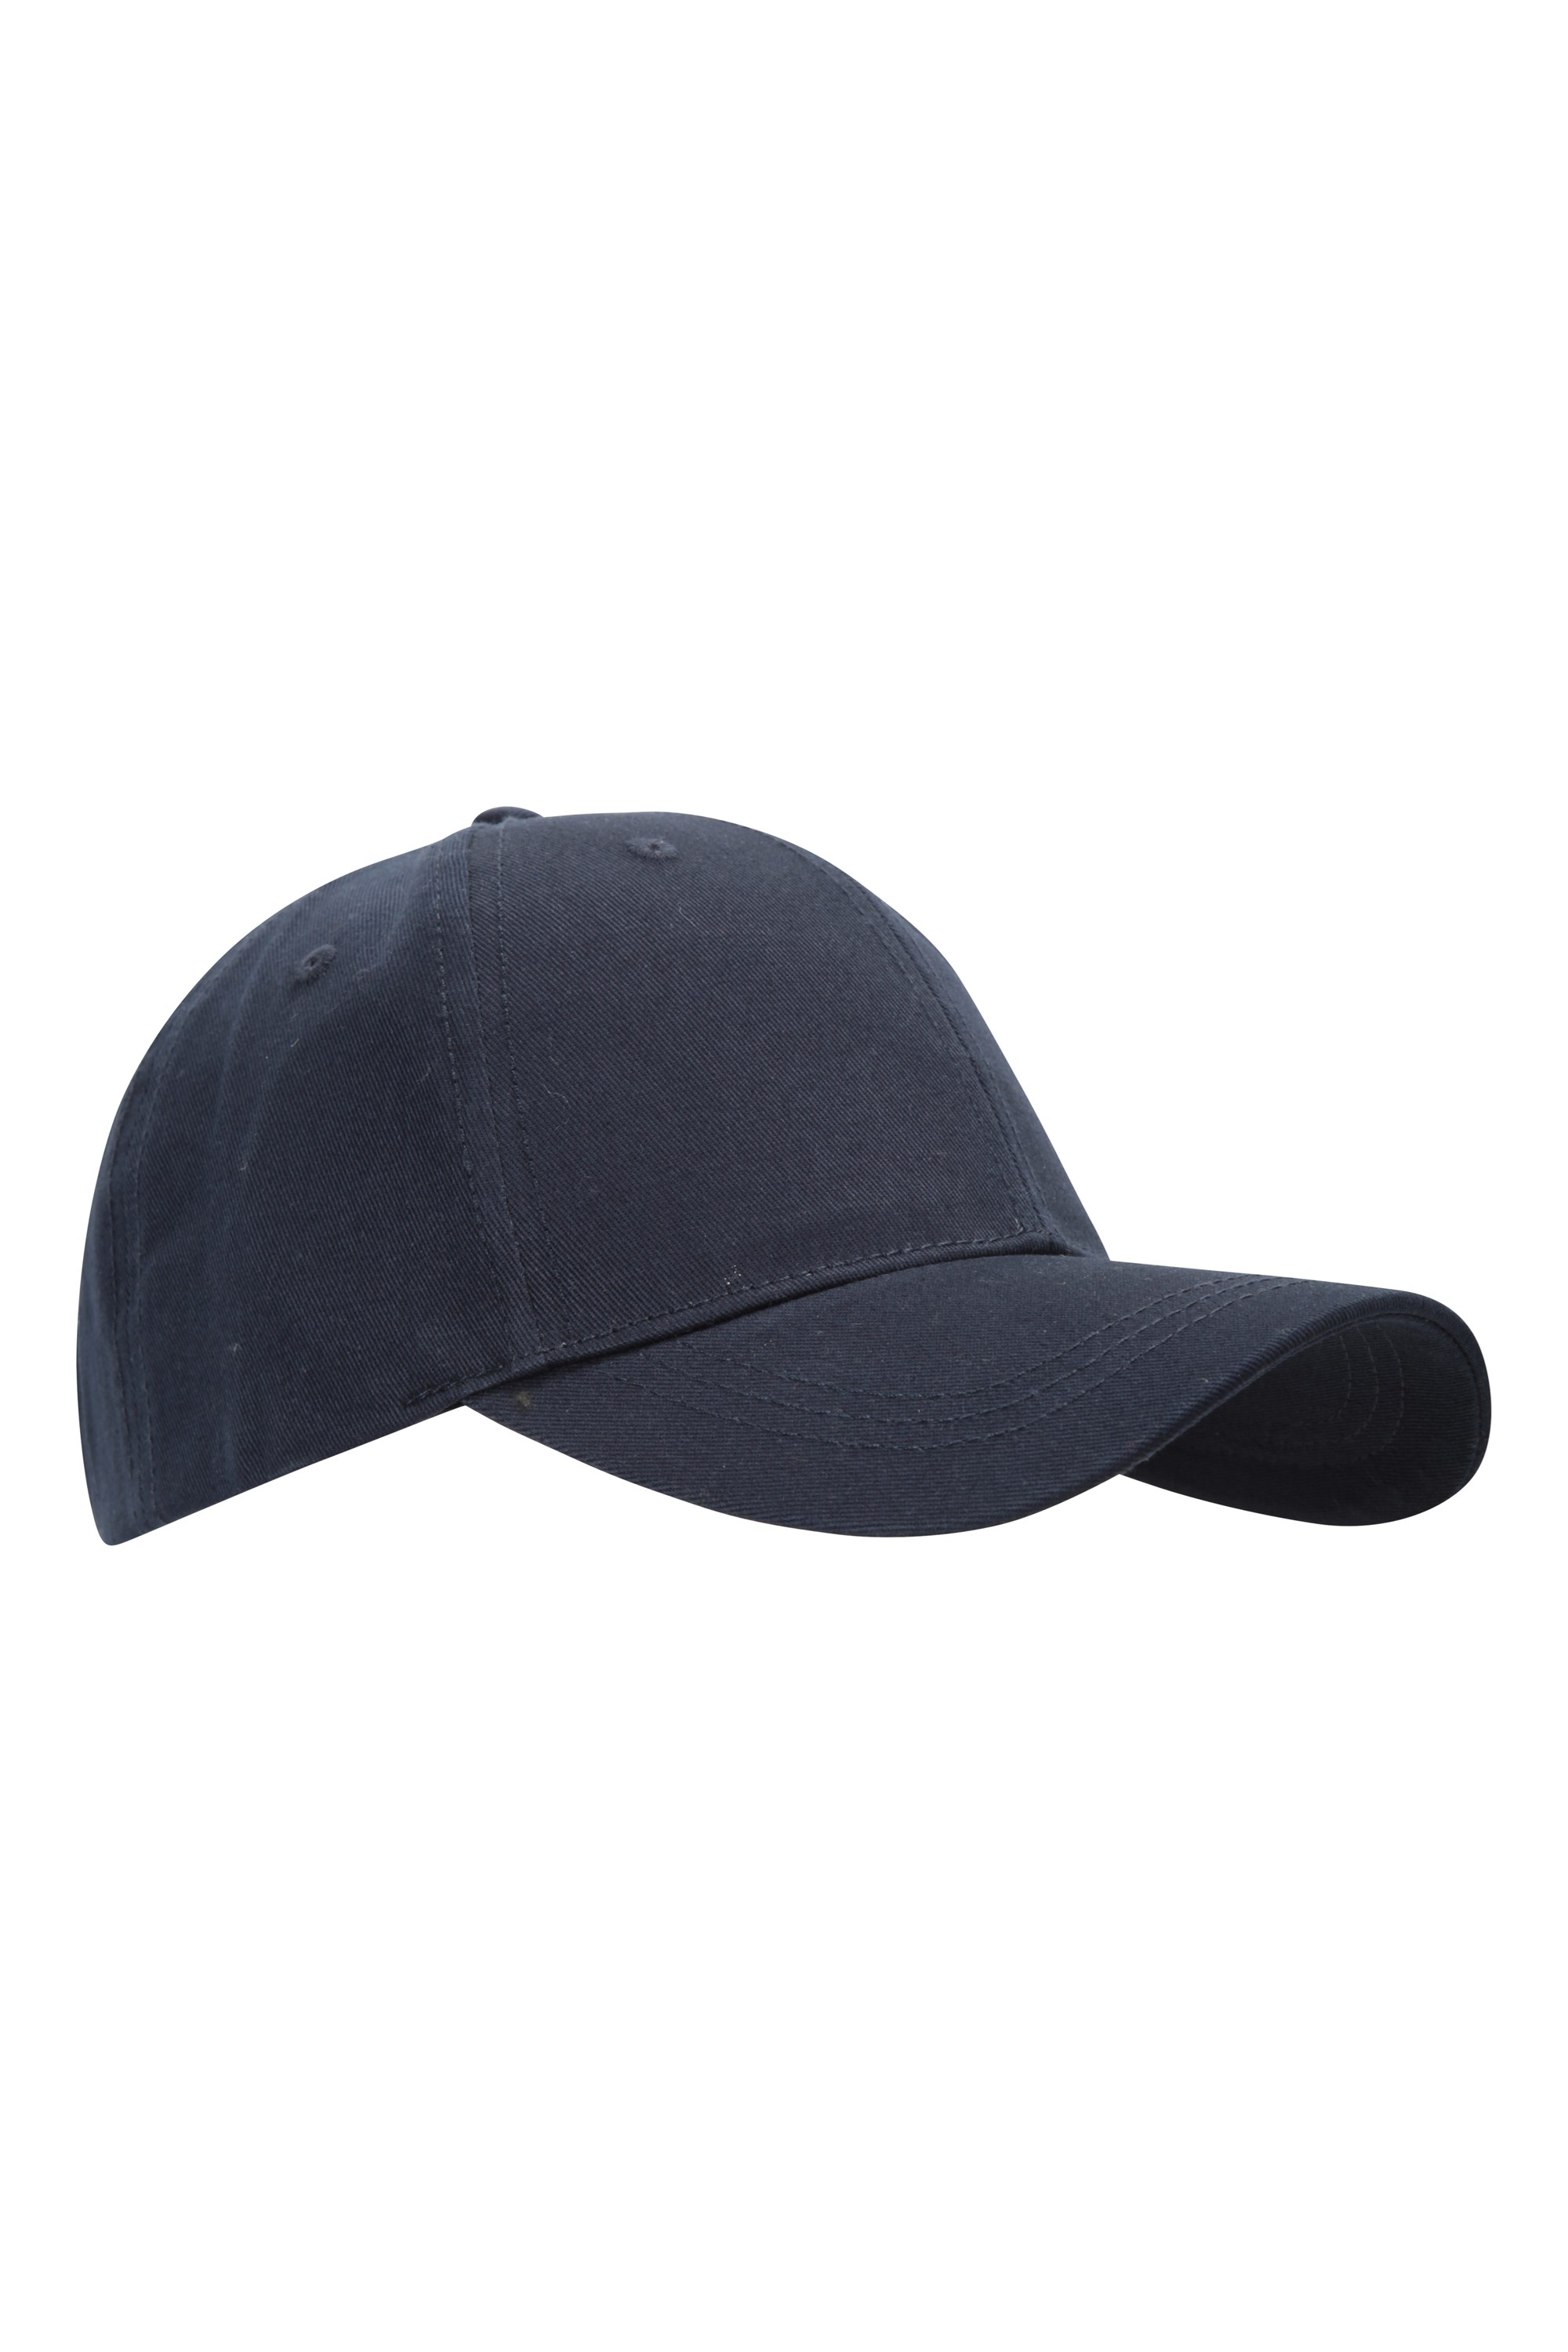 Lightweight Grey Twill Design 100% Cotton Cap Hat Mountain Warehouse Mens Baseball Cap